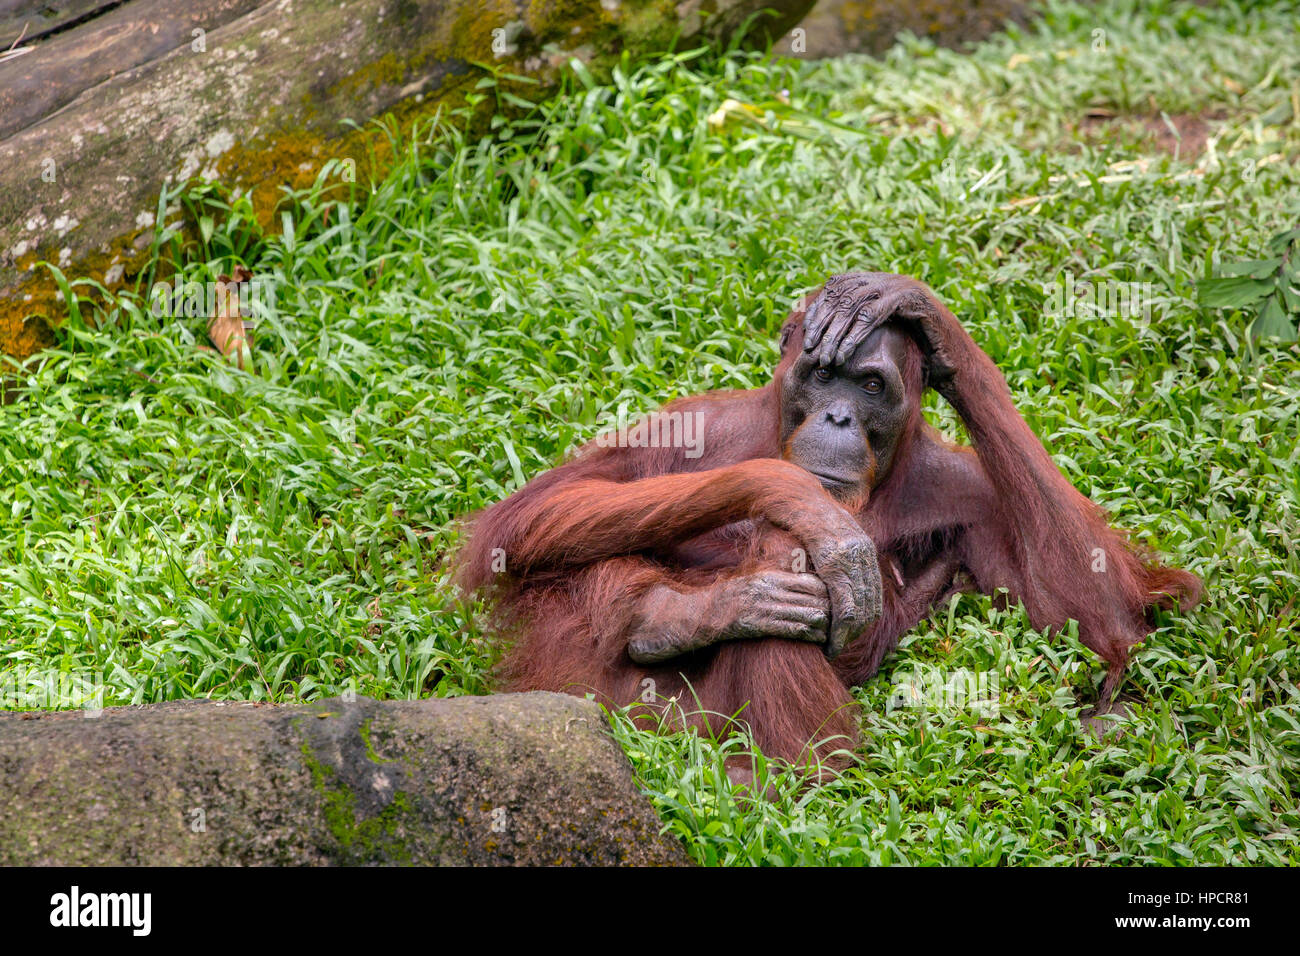 Female orangutan sitting on the grass in the Singapore Zoo Stock Photo